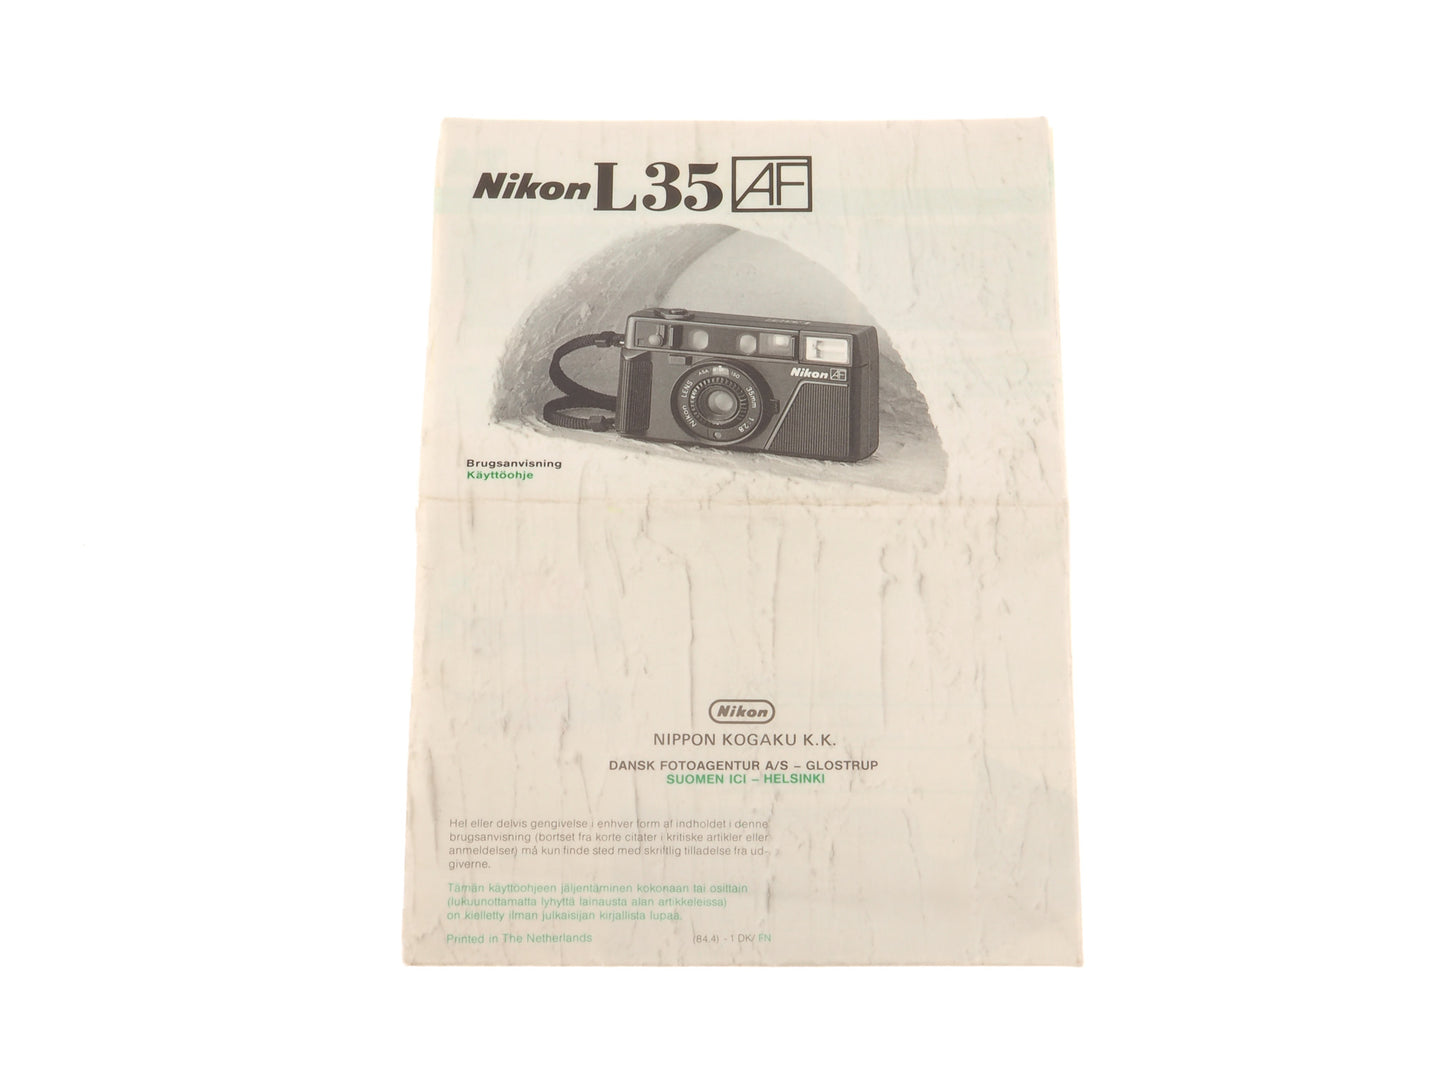 Nikon L35AF Brugsanvisning/Käyttöohje - Accessory